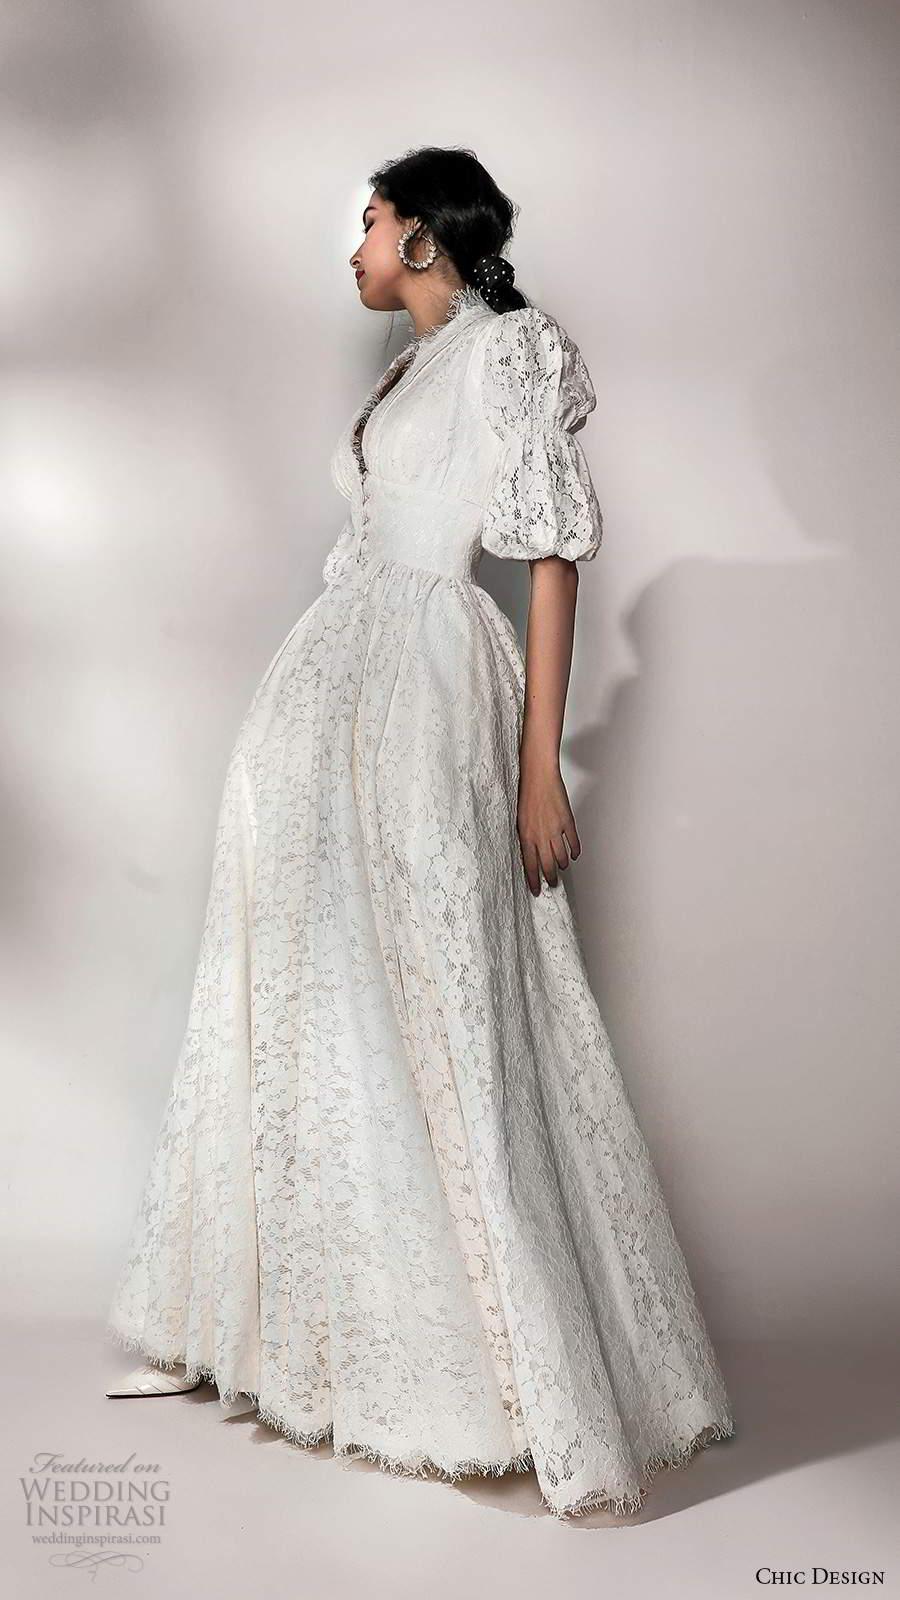 chic design 2020 bridal puff half sleeves v neckline embellished lace a line ball gown wedding dress chapel train (1) sv